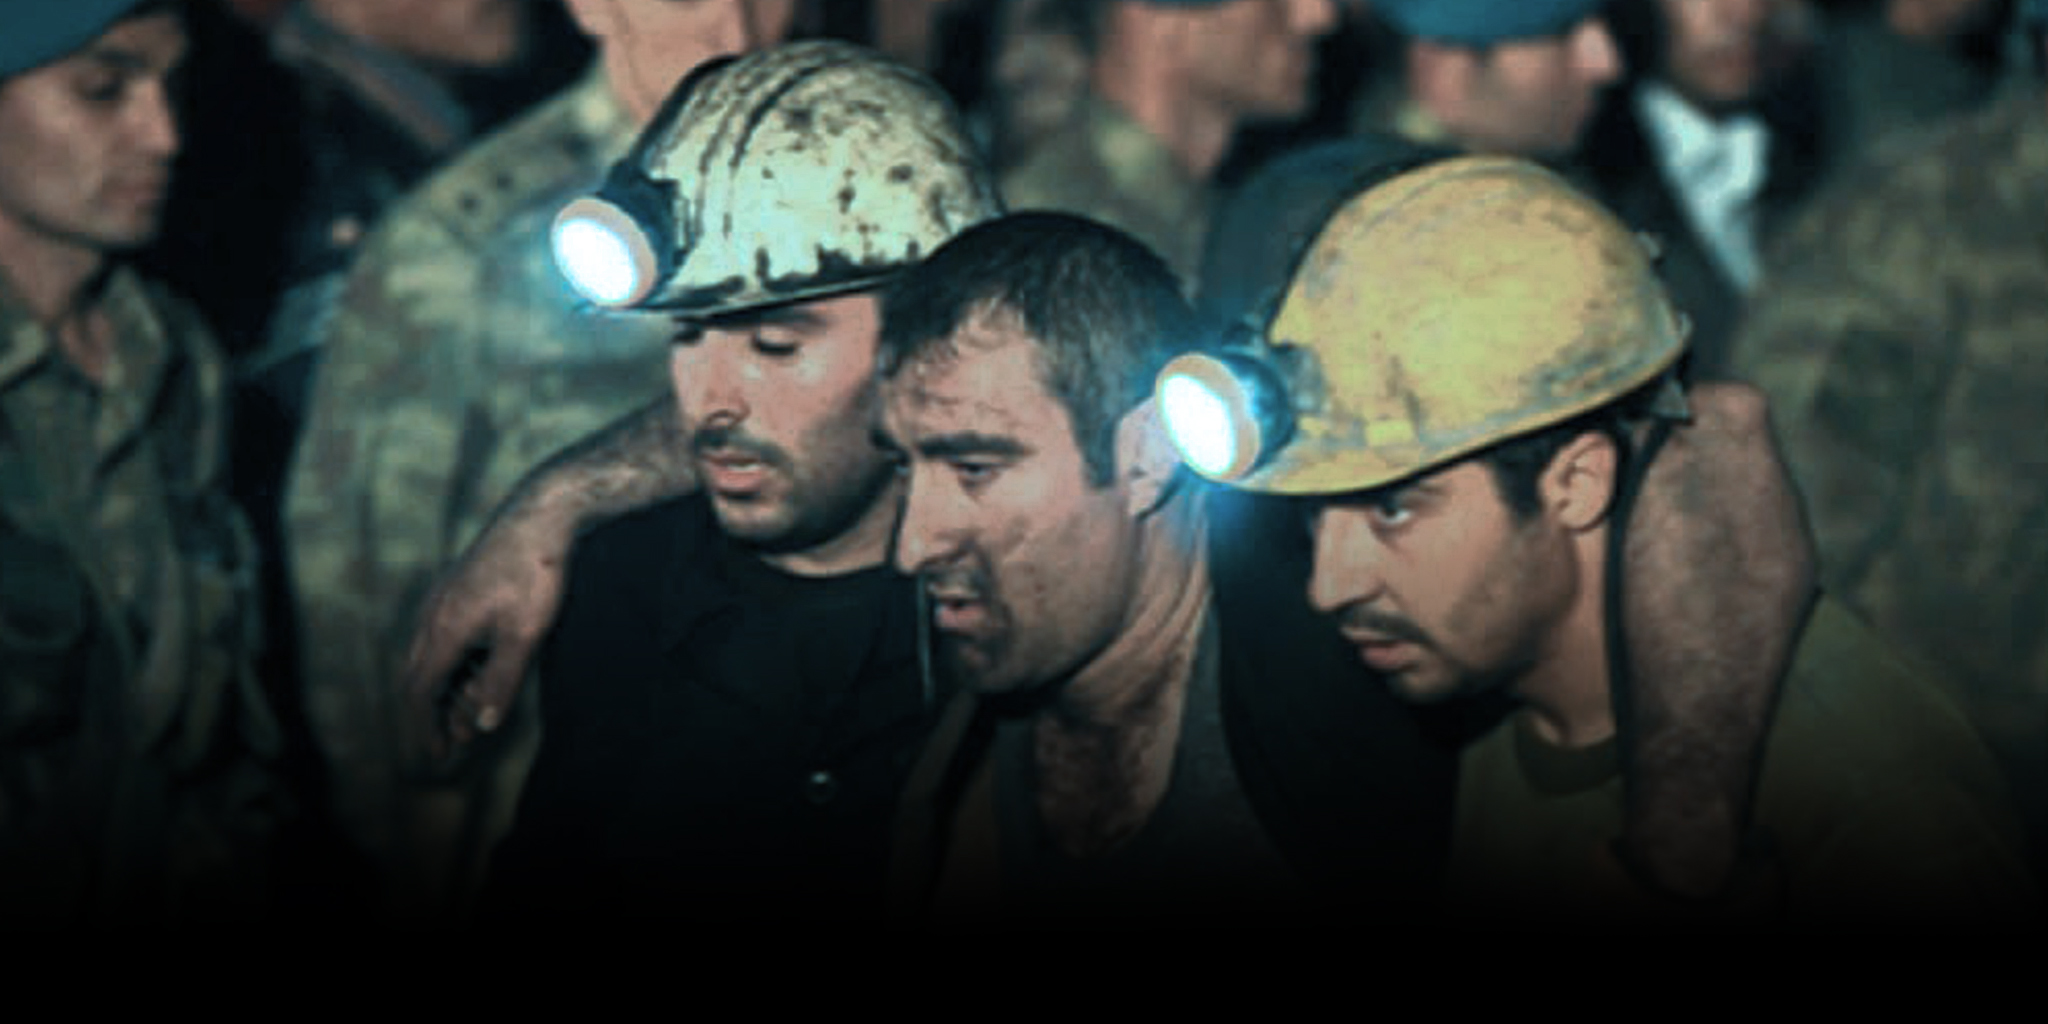 301 madenciyi asla unutmayacağız!